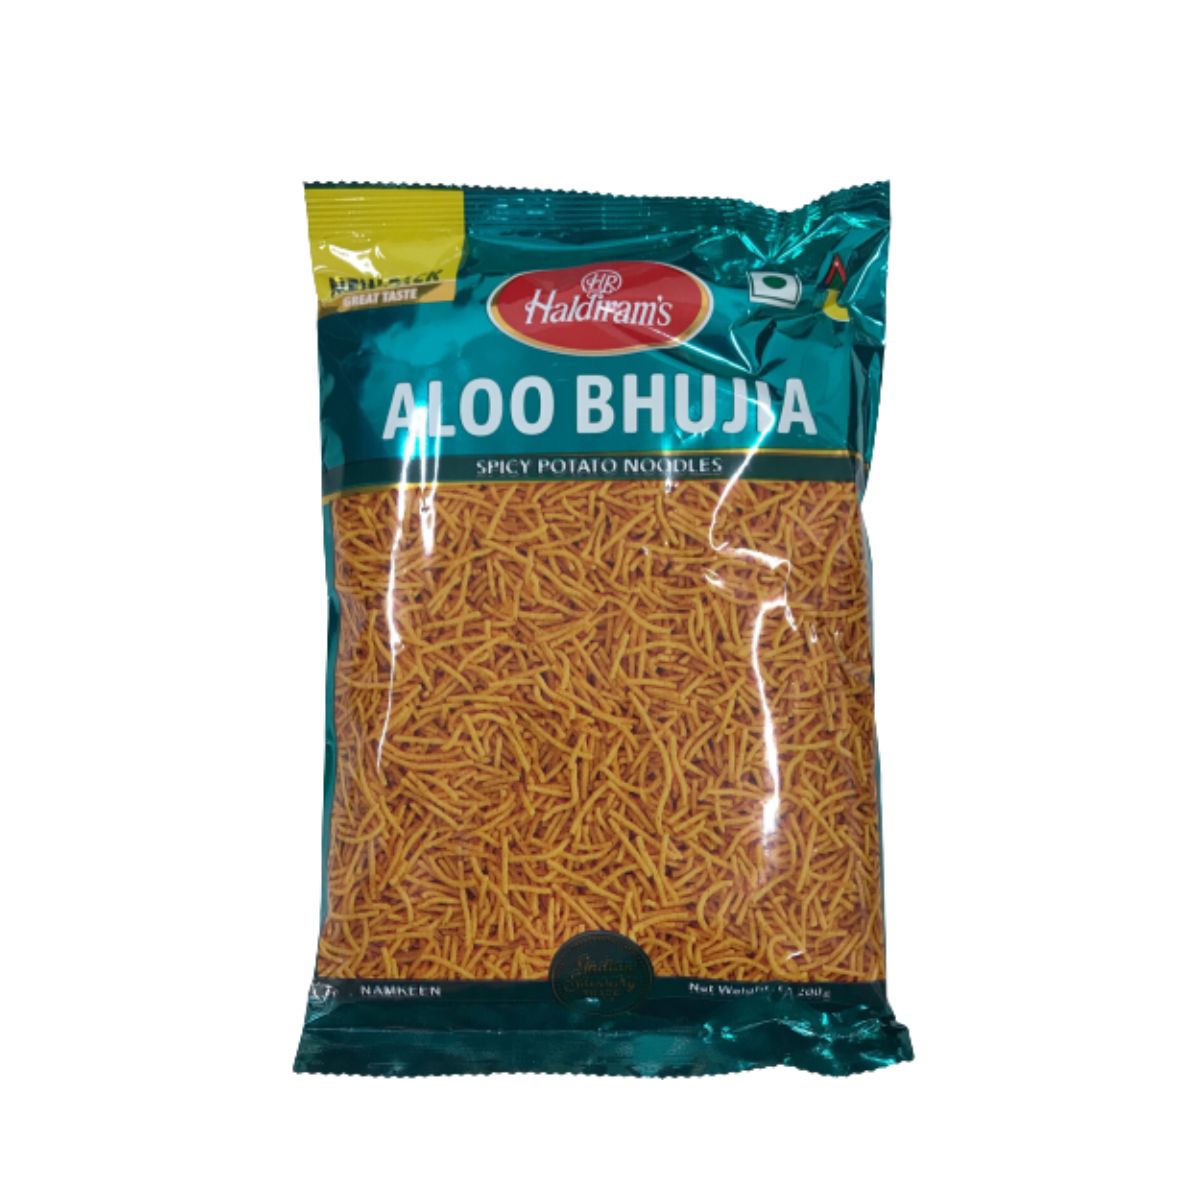 Haldiram's Aloo Bhujia - Spicy Potato Noodles - 200g